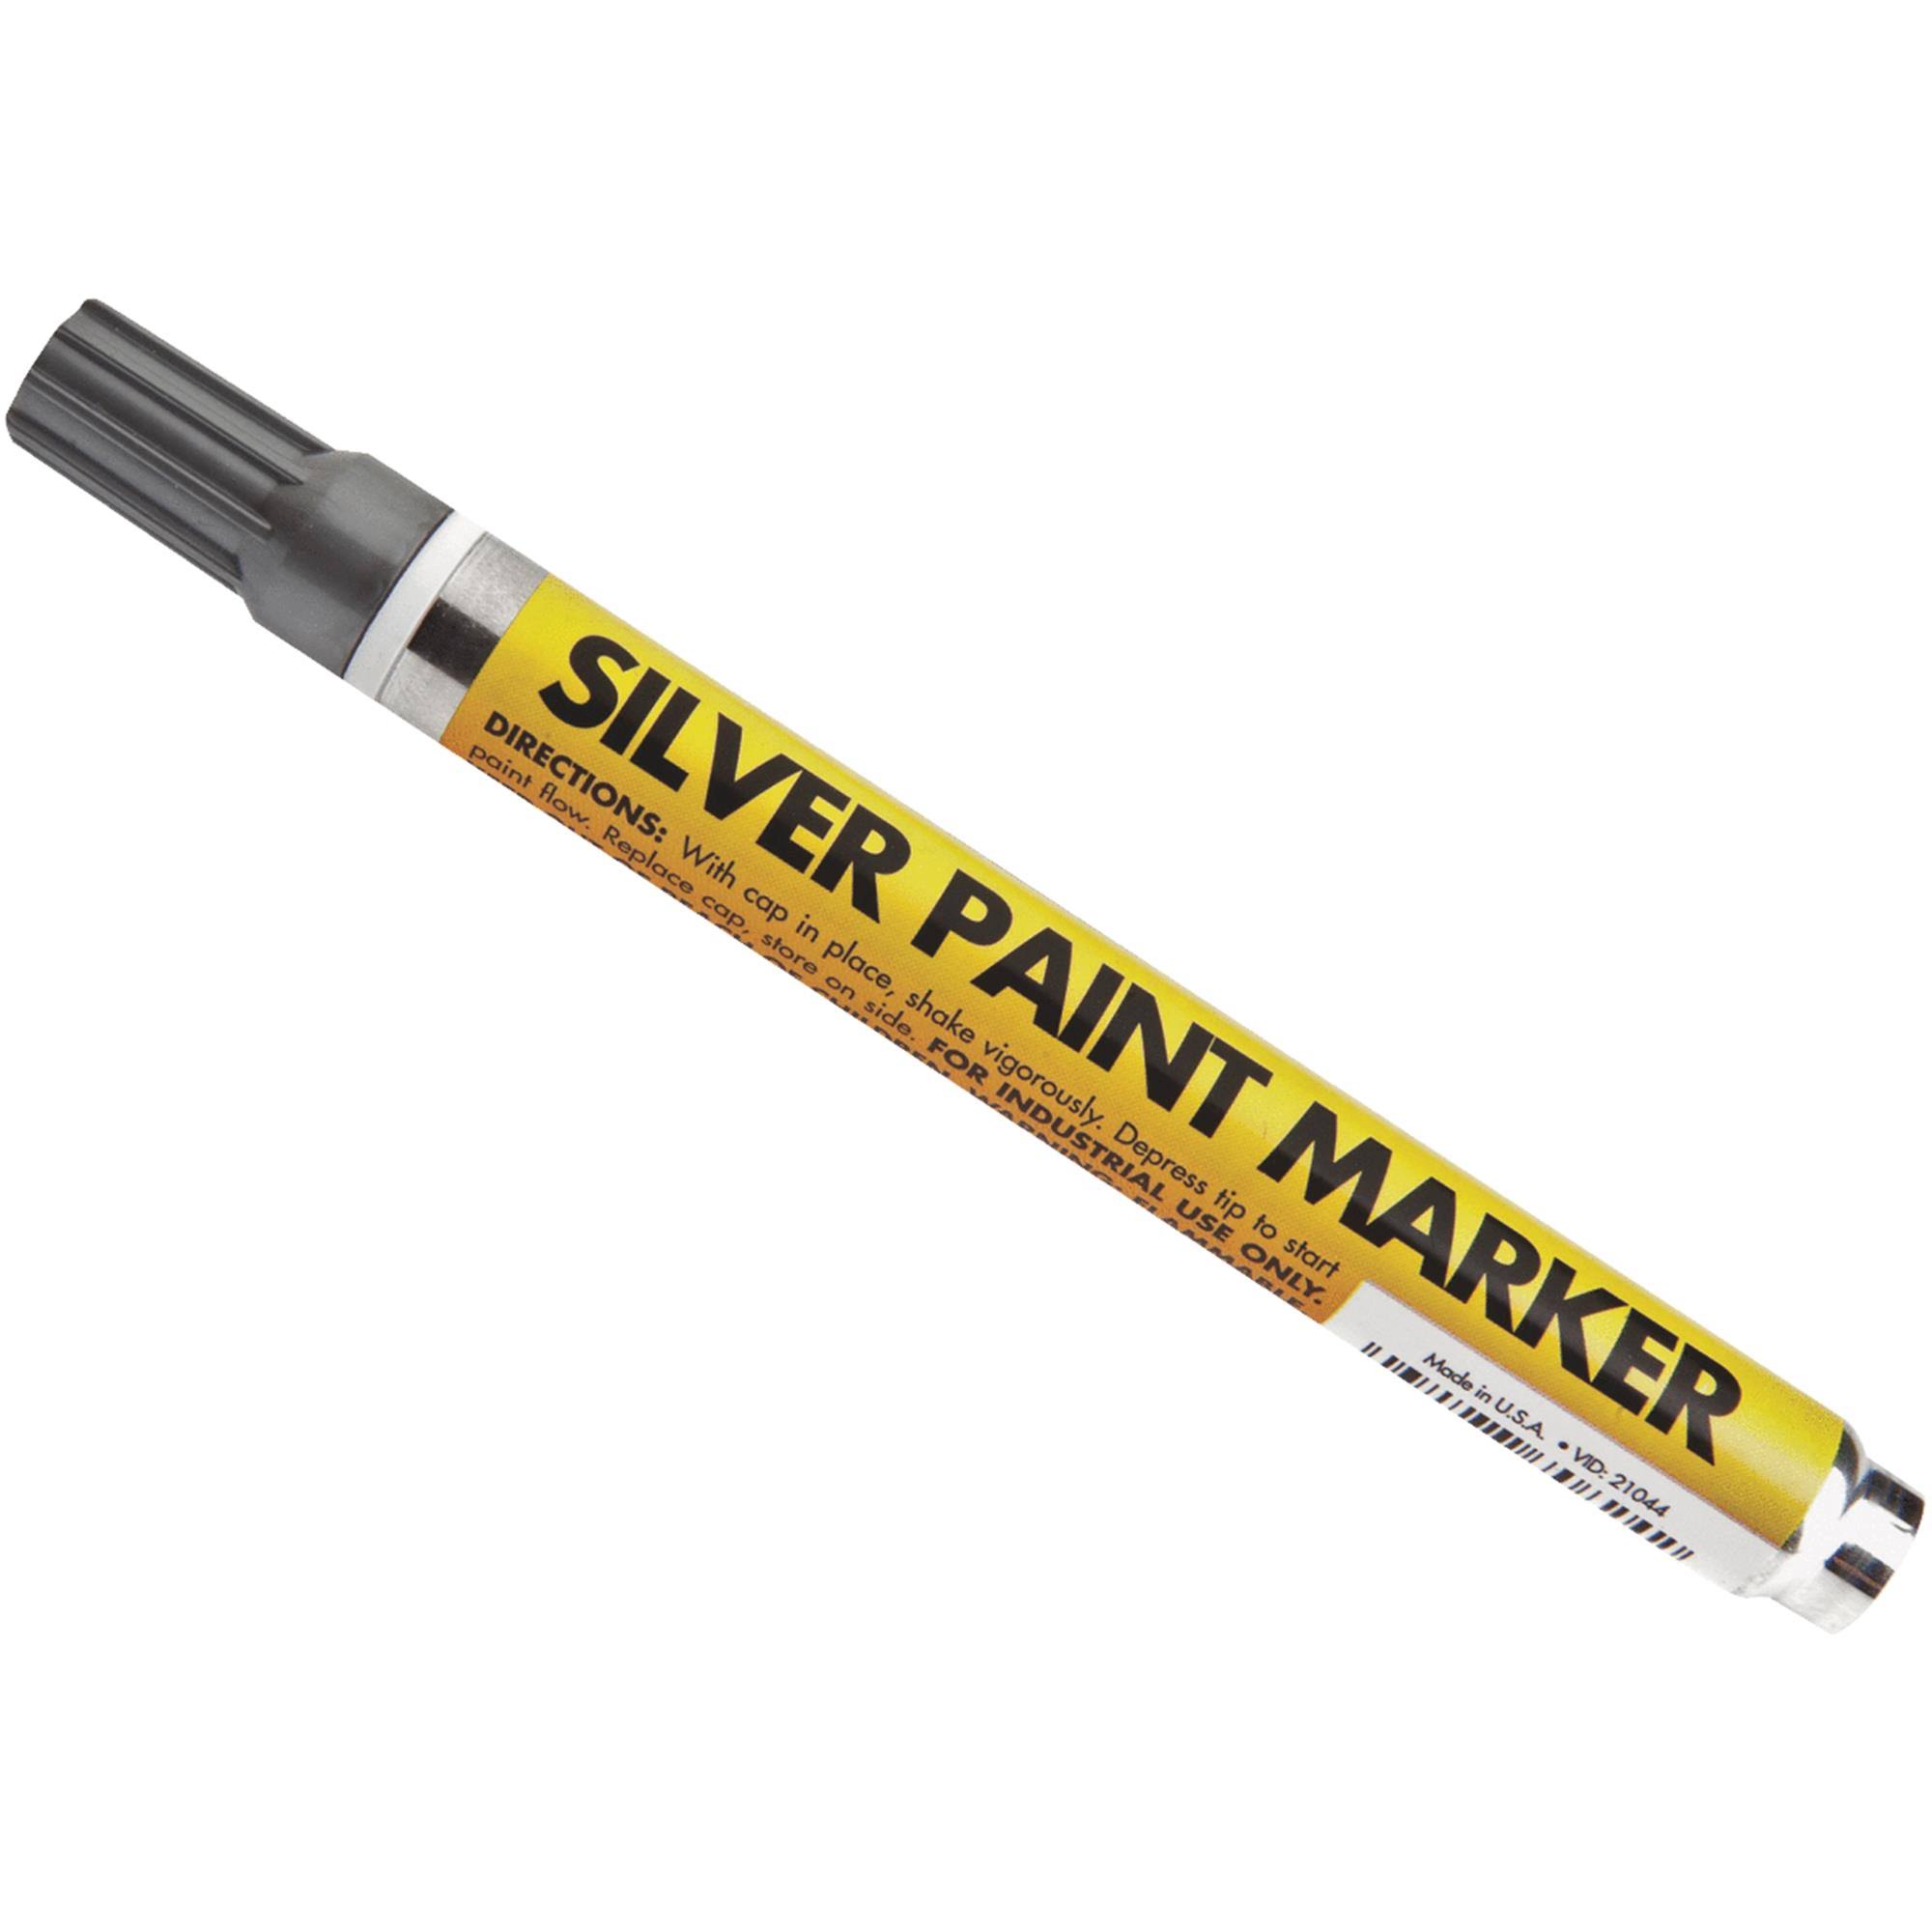 Forney Industries Welders Paint Marker - Silver